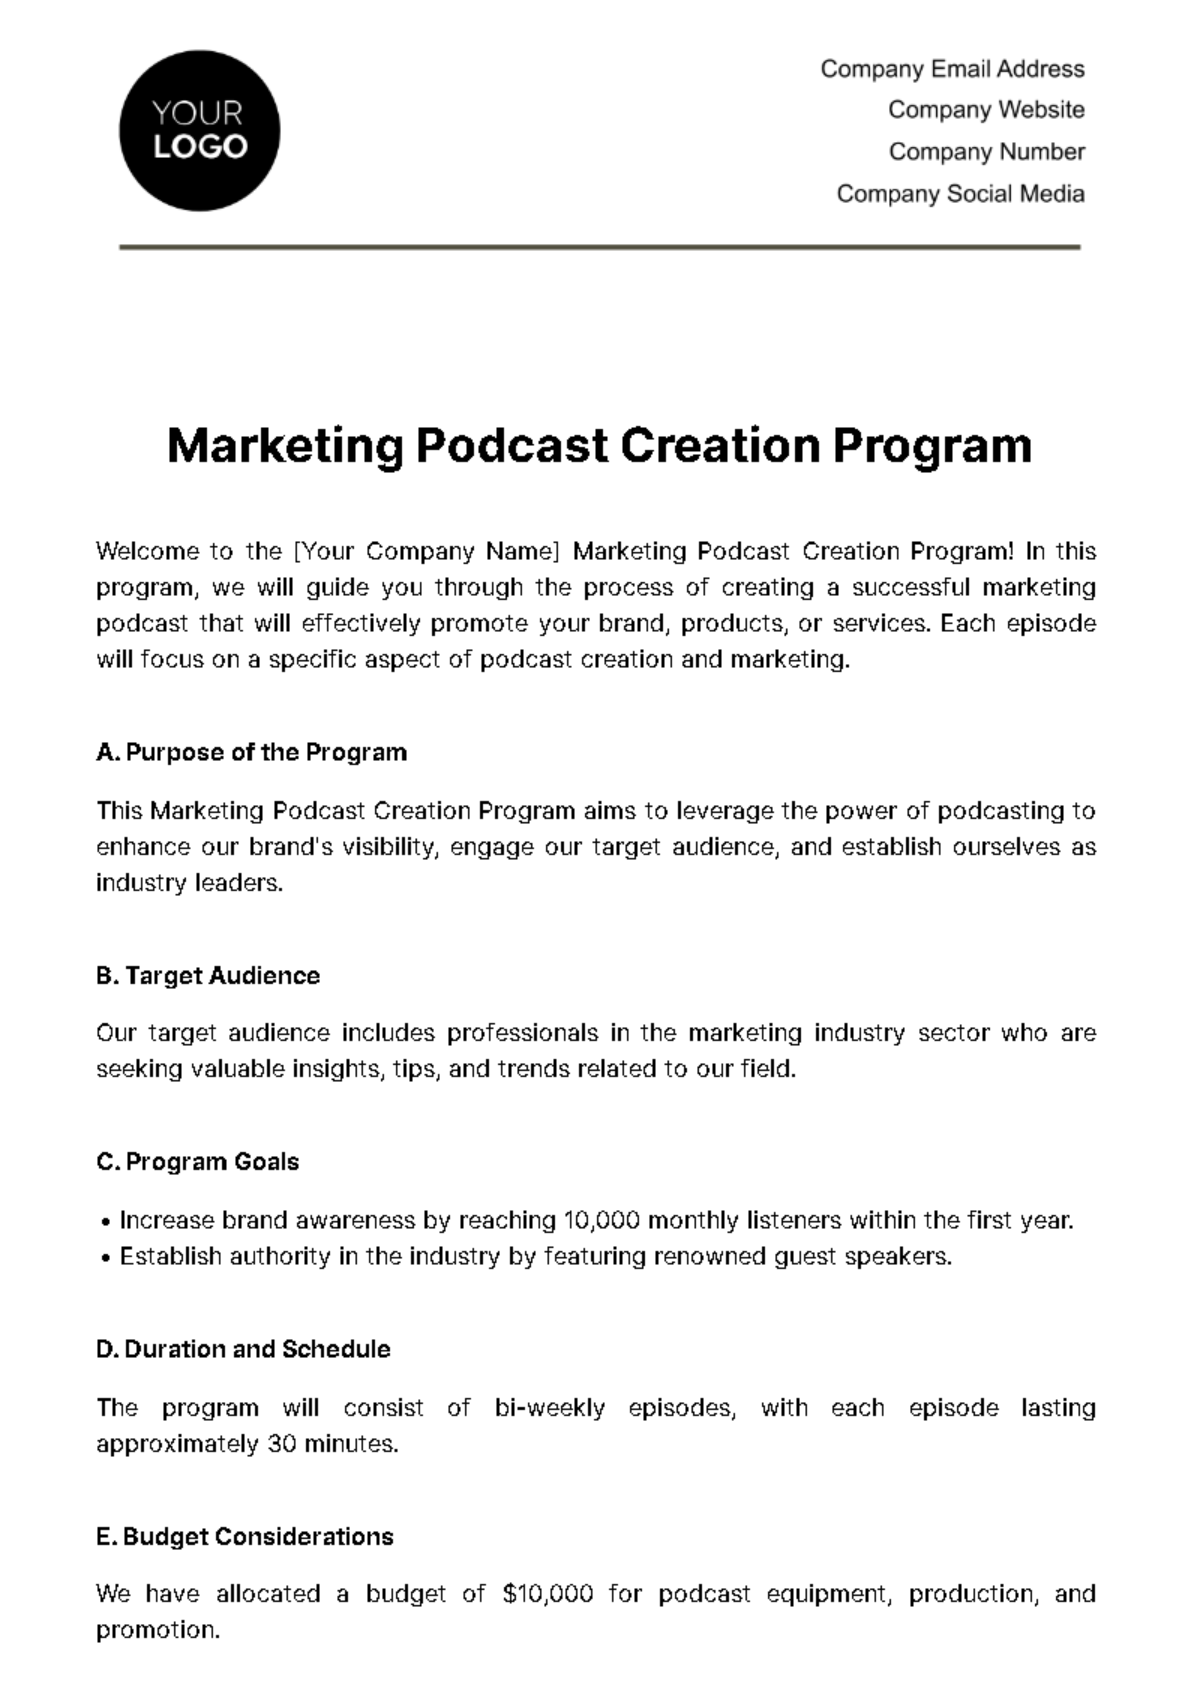 Marketing Podcast Creation Program Template